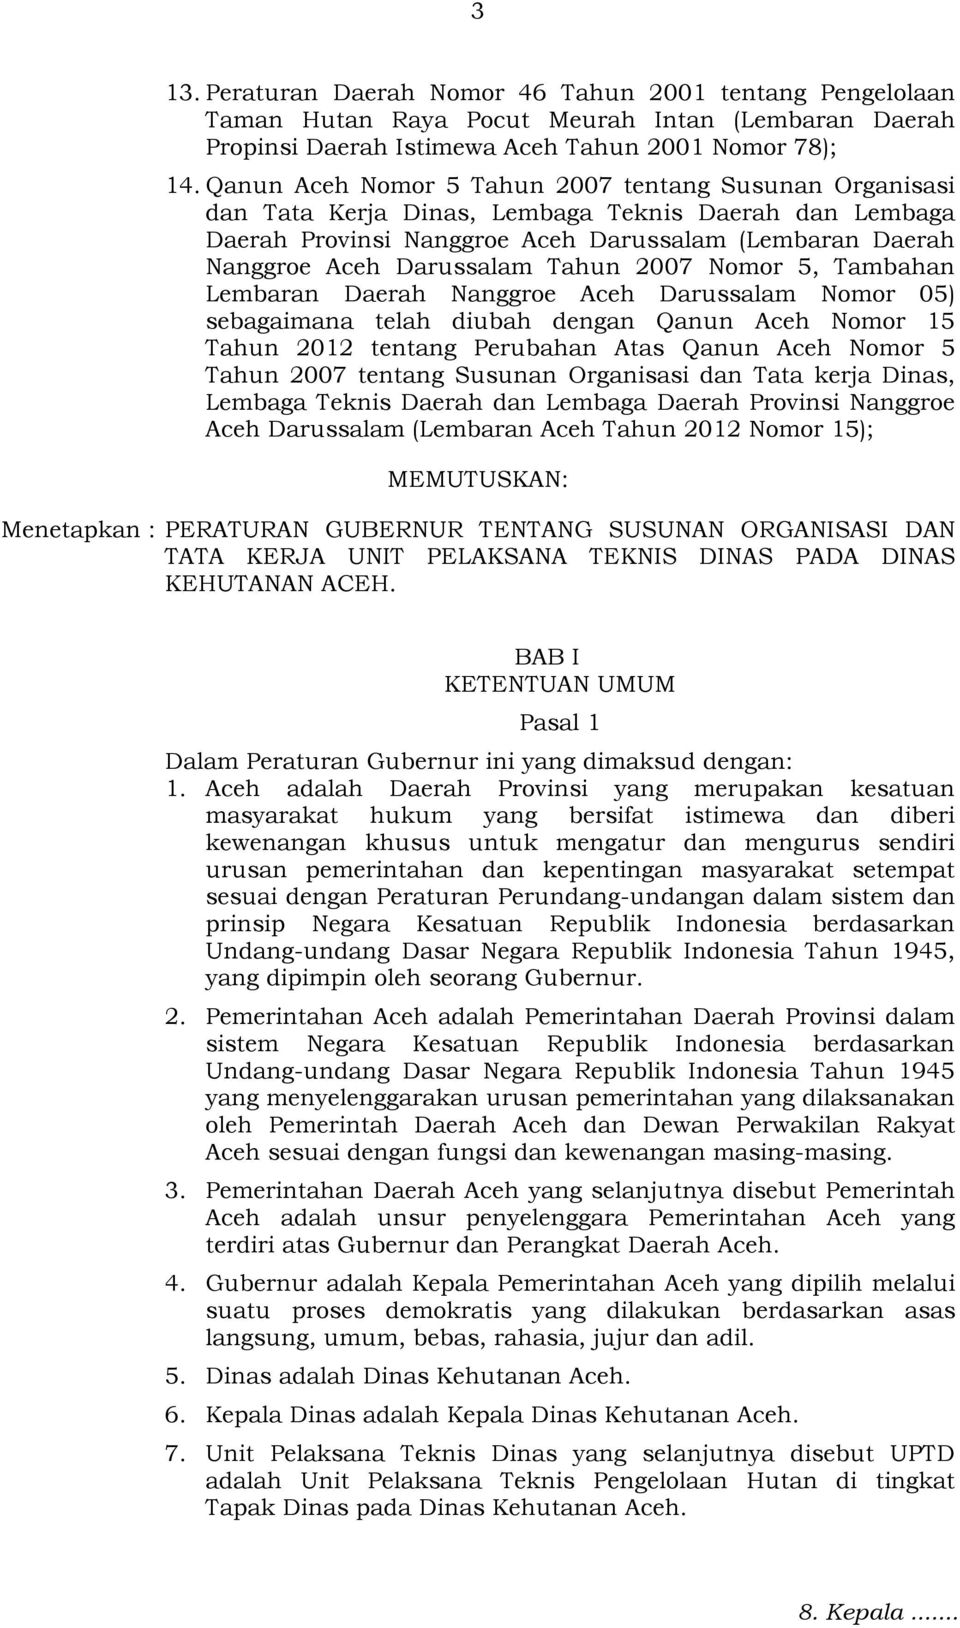 Tahun 2007 Nomor 5, Tambahan Lembaran Daerah Nanggroe Aceh Darussalam Nomor 05) sebagaimana telah diubah dengan Qanun Aceh Nomor 15 Tahun 2012 tentang Perubahan Atas Qanun Aceh Nomor 5 Tahun 2007